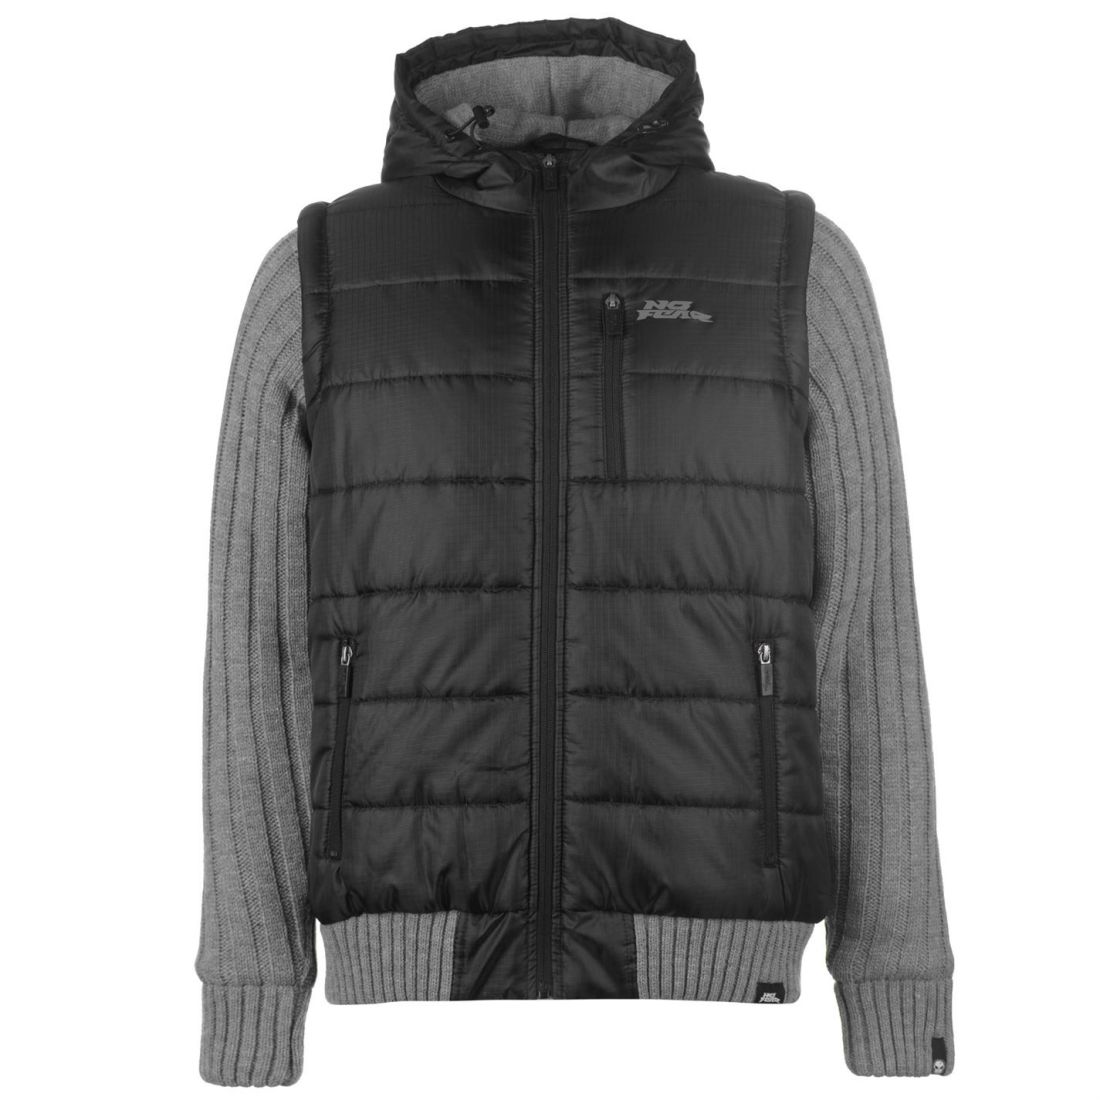 no-fear-mens-knitted-sleeve-jacket-puffer-coat-top-hooded-zip-full-warm-ebay